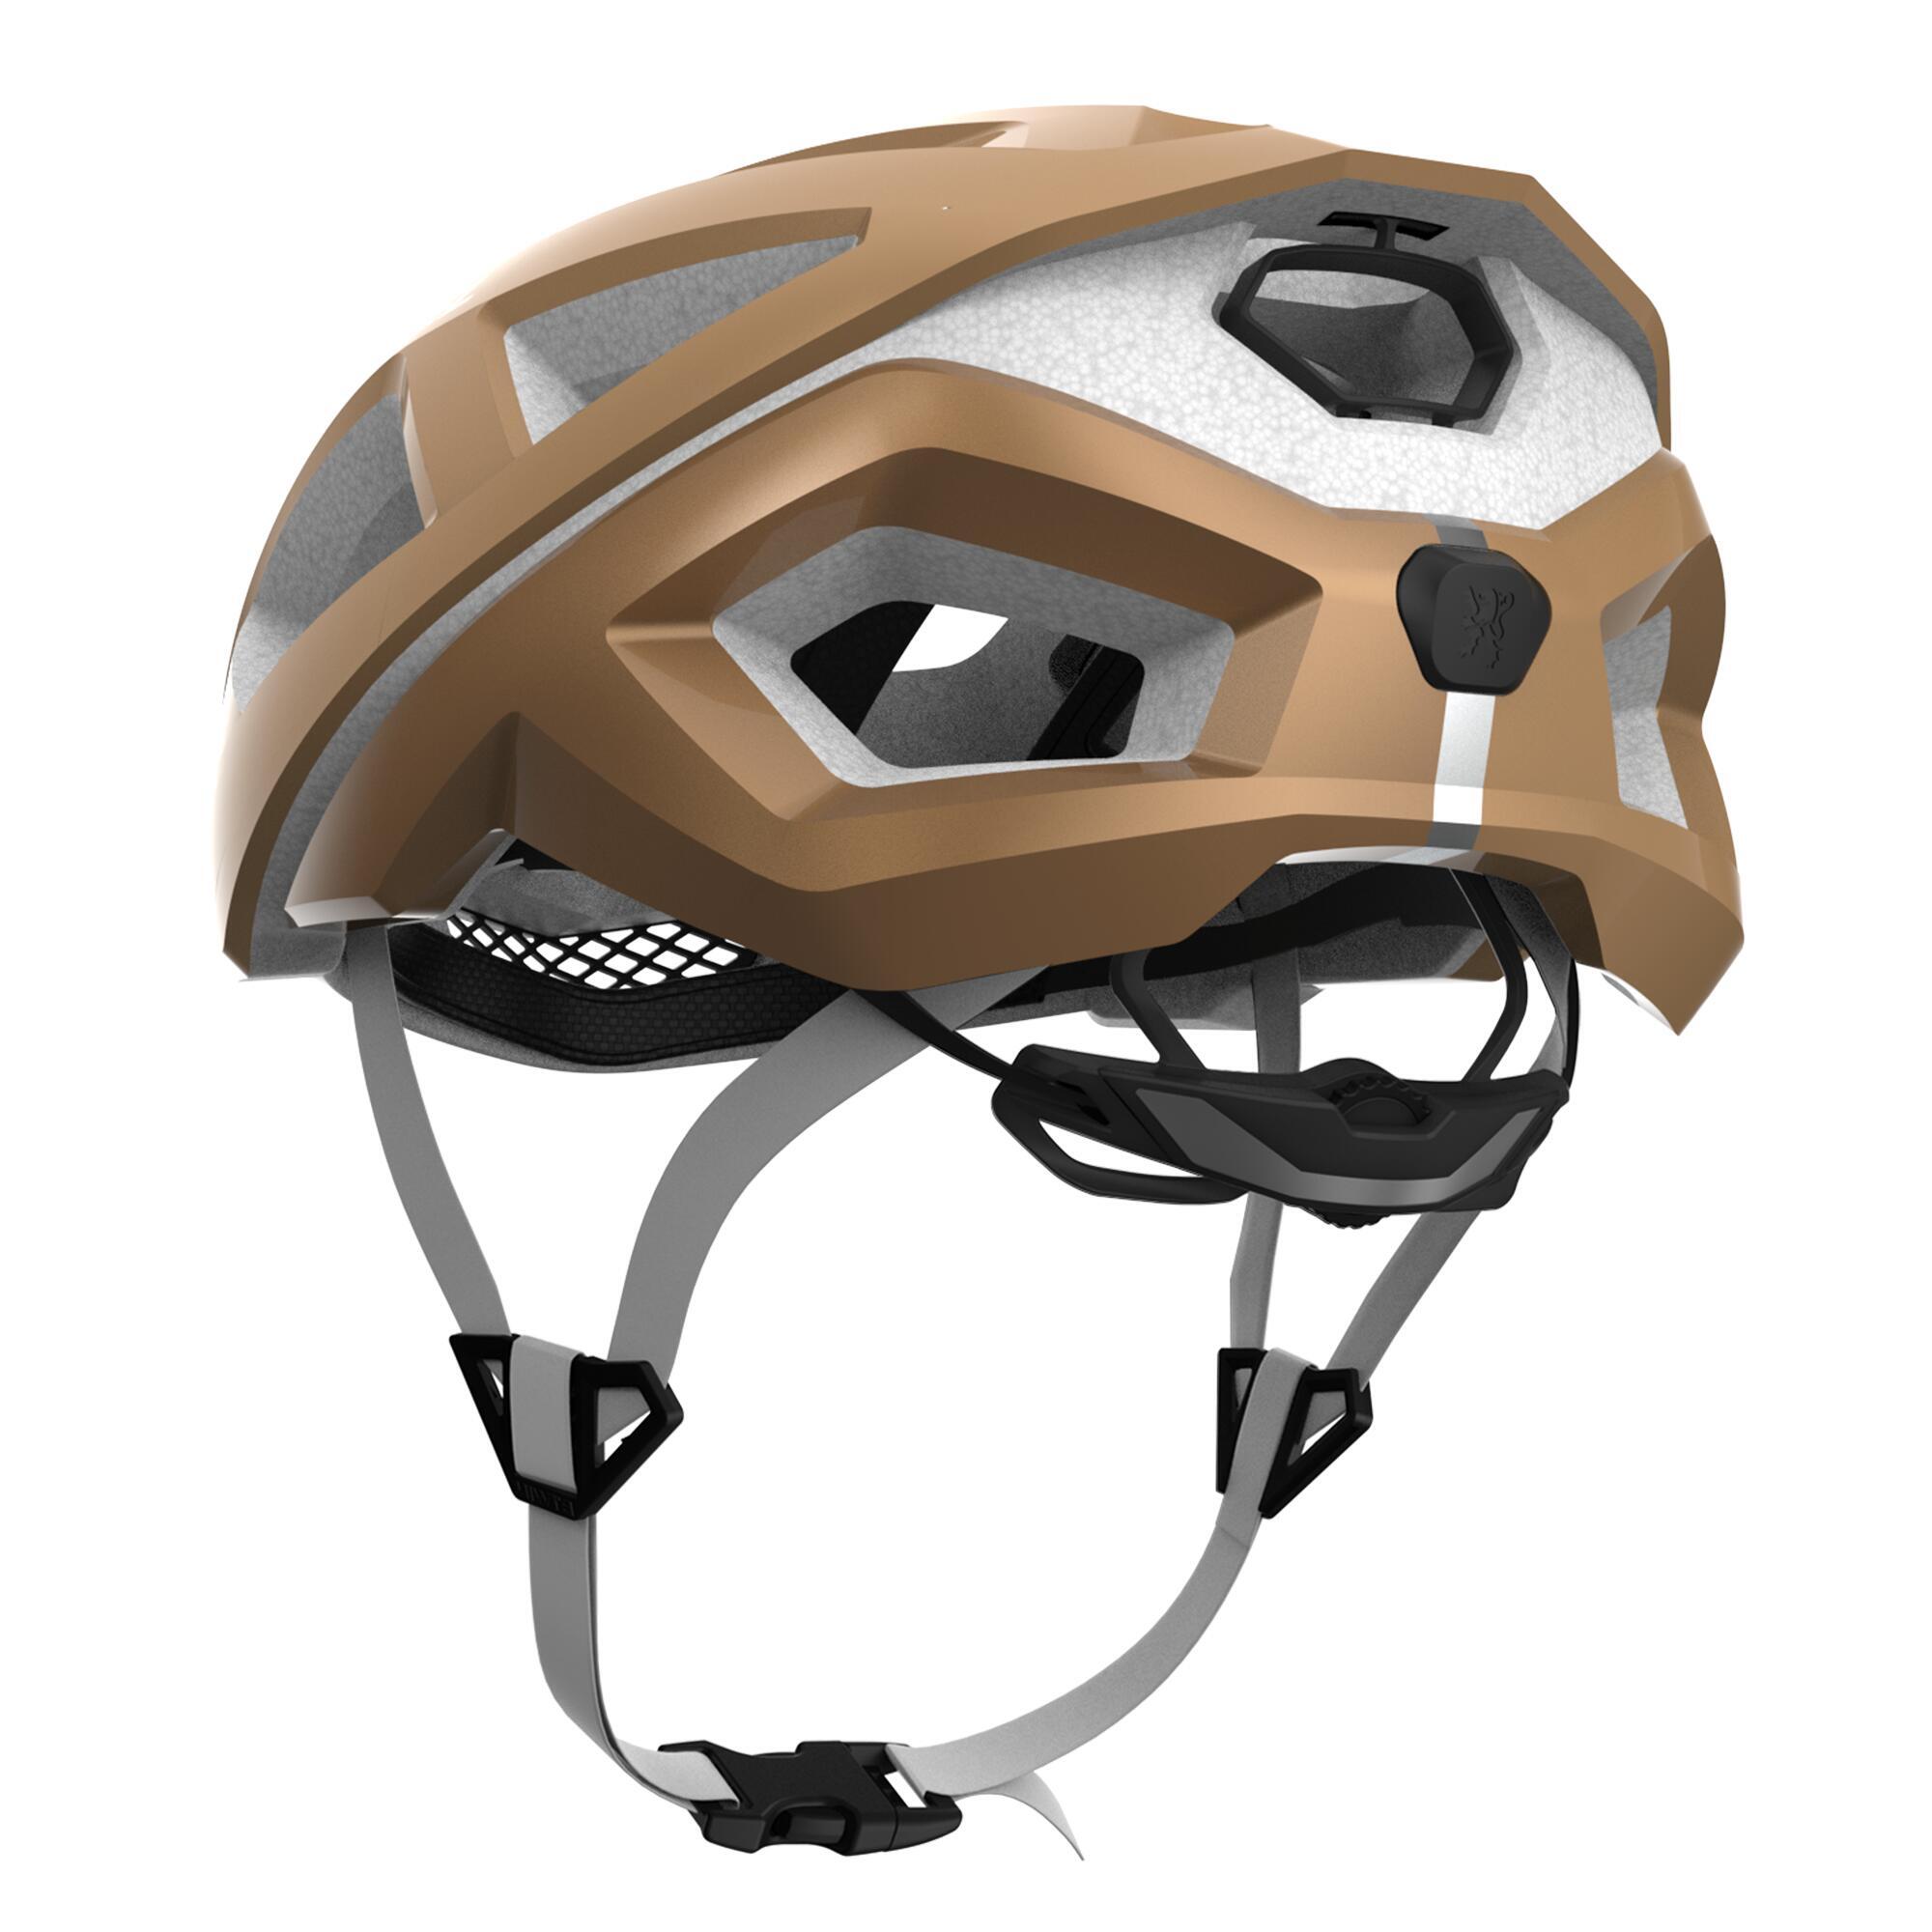 Cycling Helmet Racer - Sand 2/6